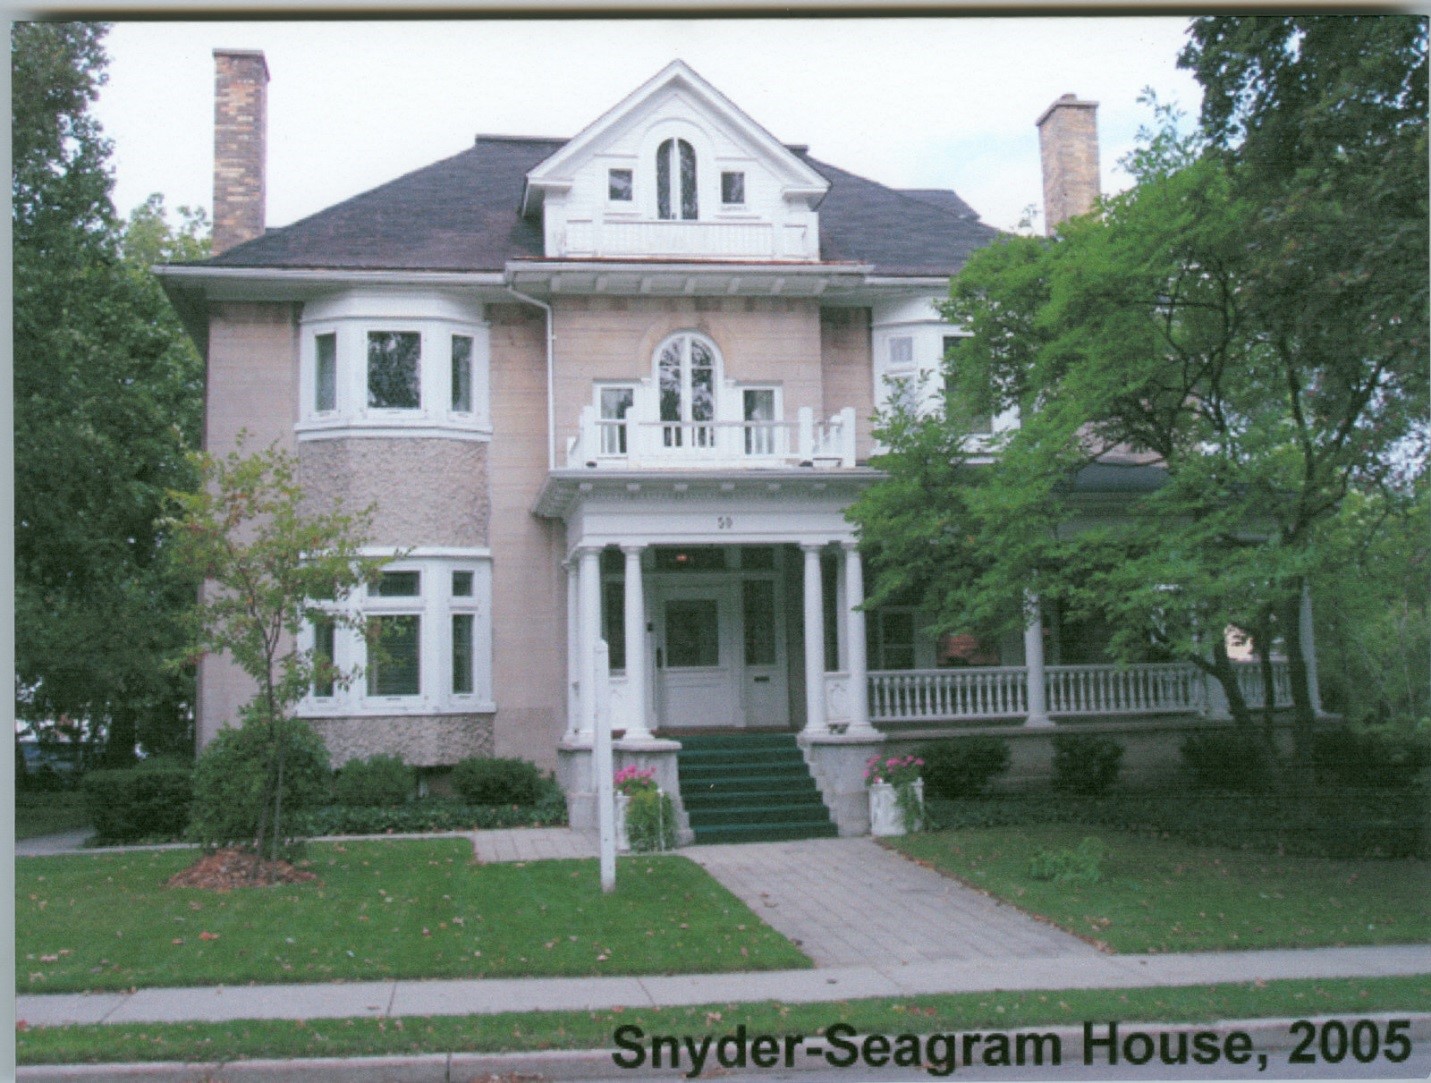 Snyder-Seagram House